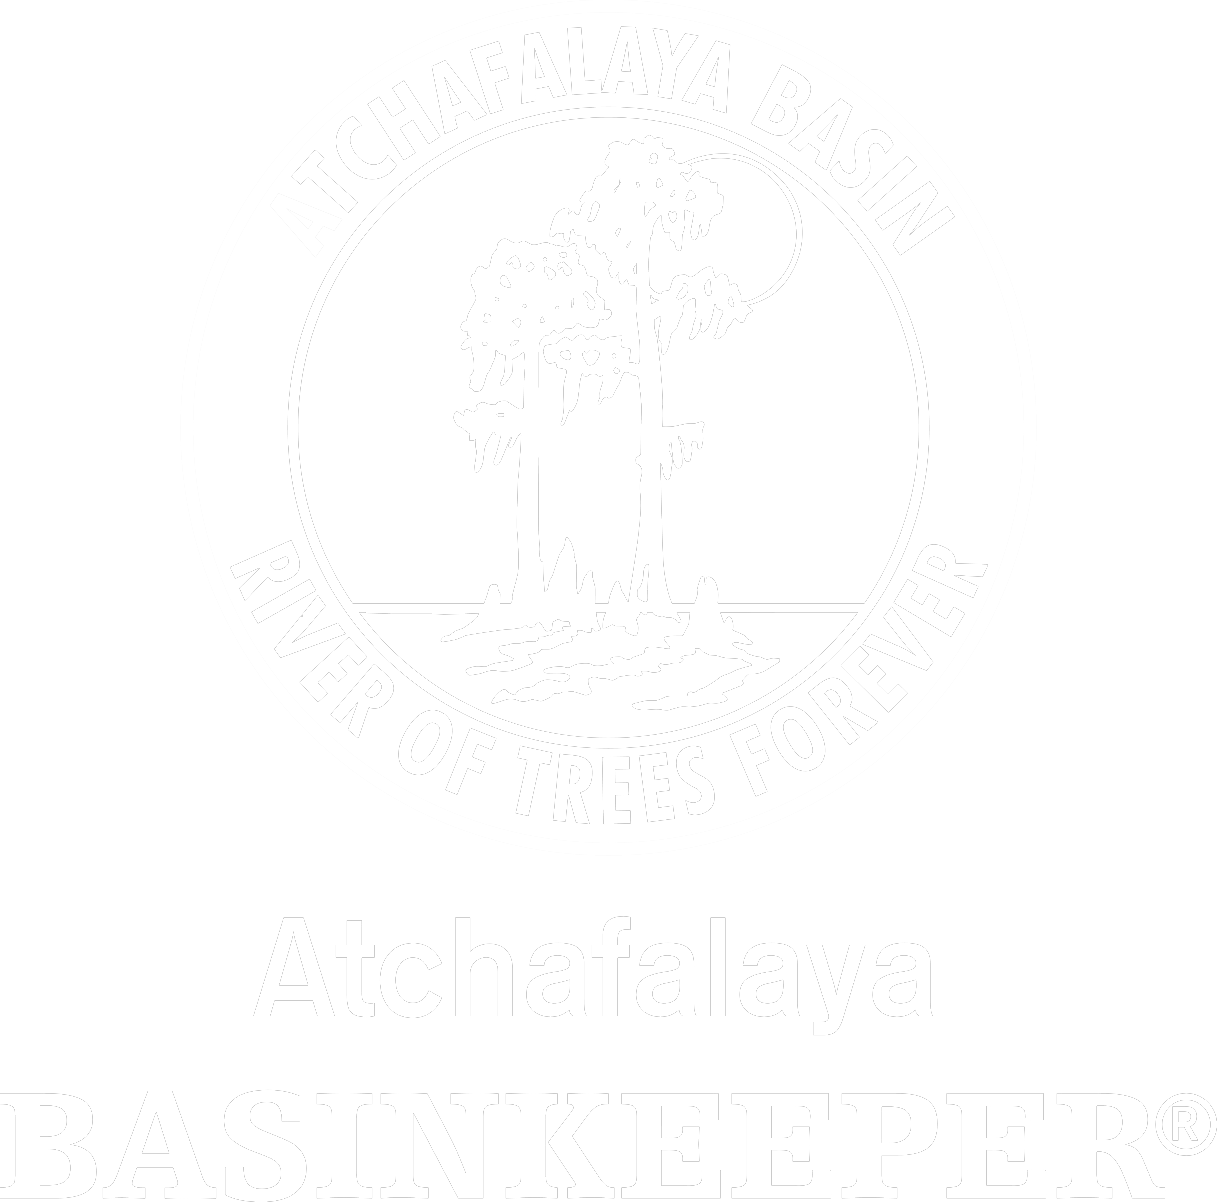 Atchafalaya Basinkeeper